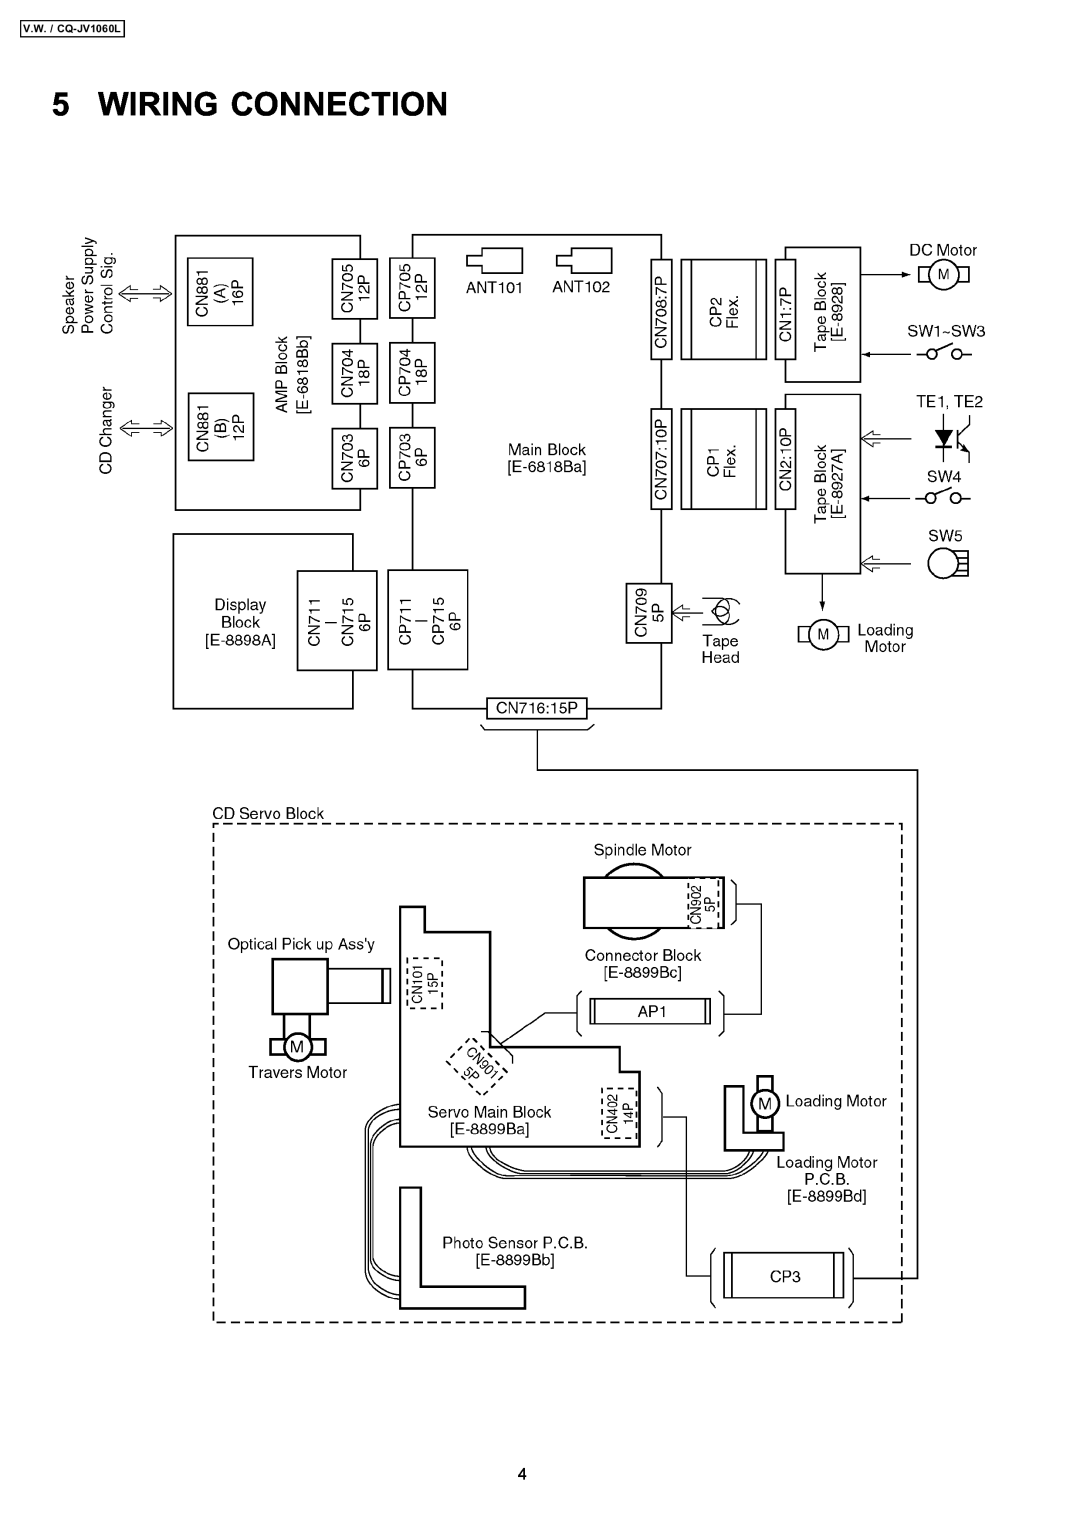 Panasonic dimensions Wiring Connection, V.W. / CQ-JV1060L 